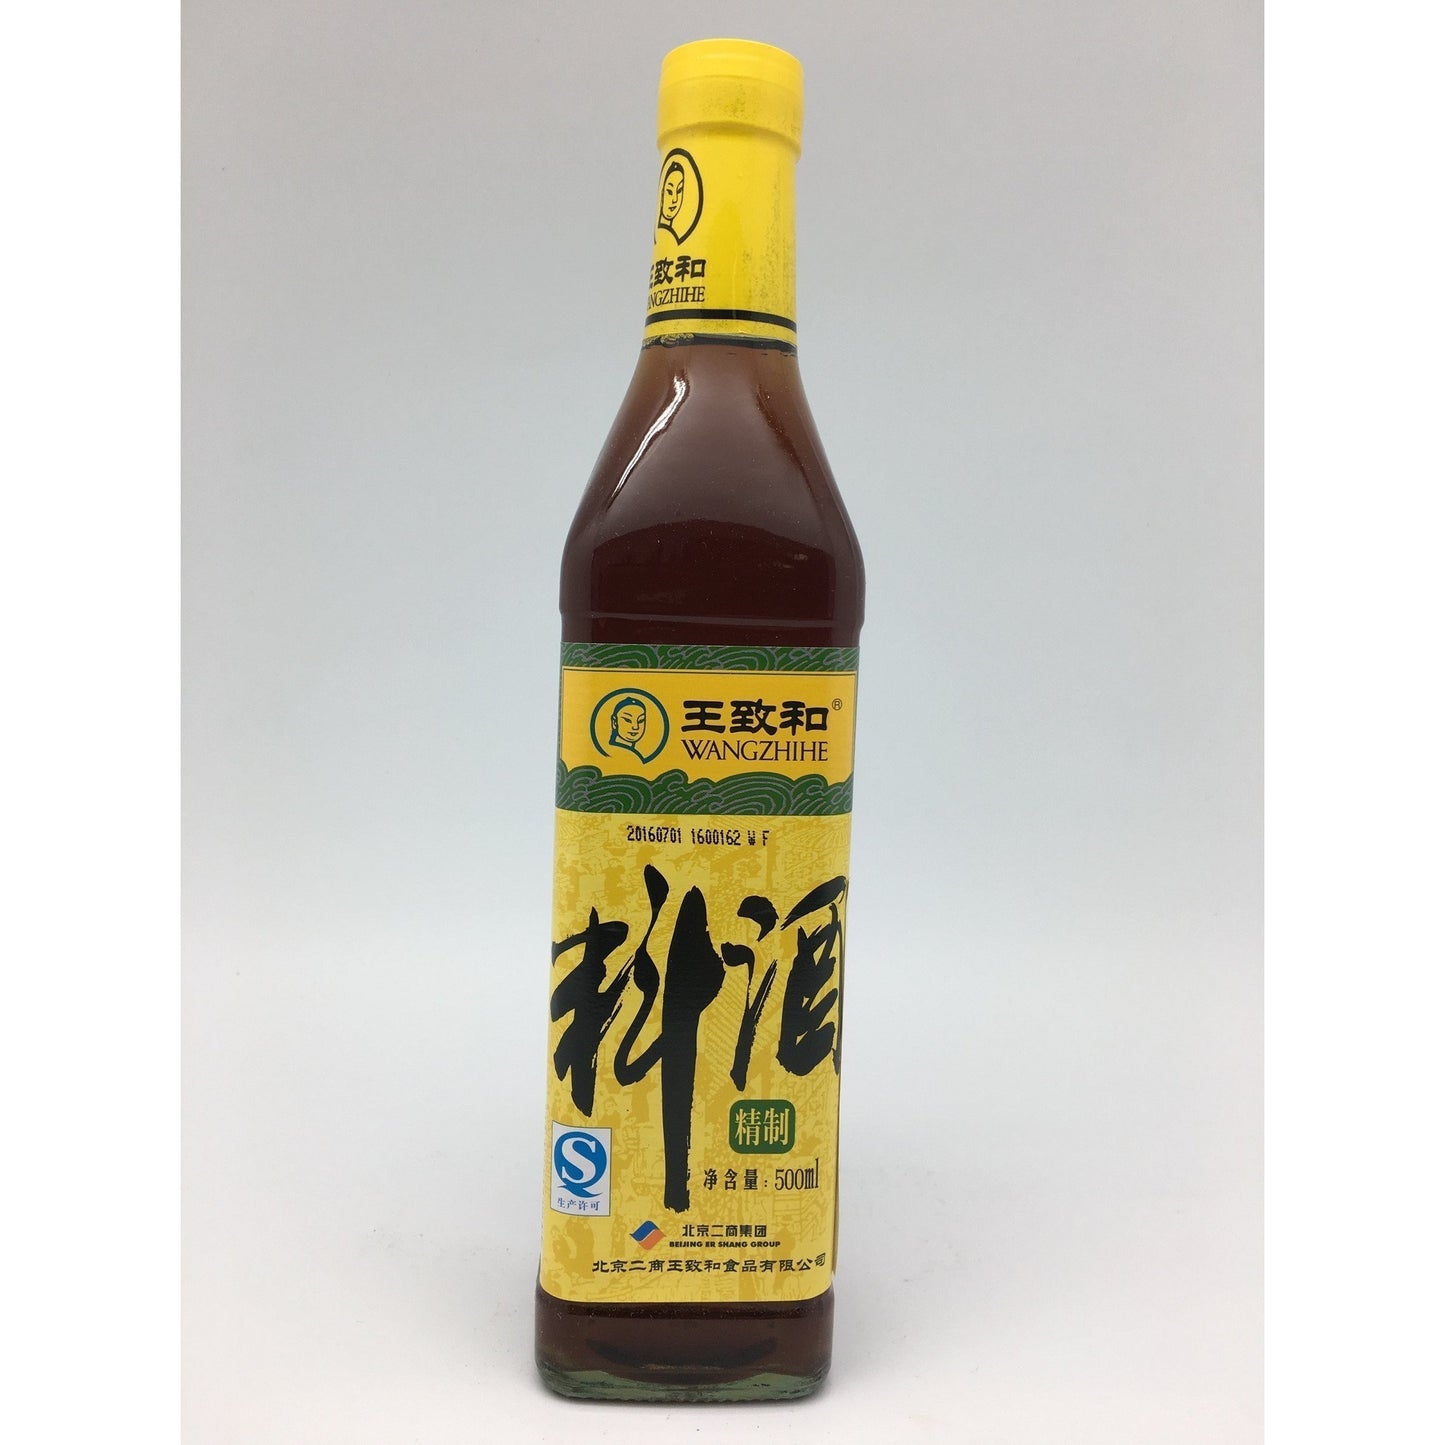 S096S Wang Zhi He Brand - Cooking Wine 500ml - 15 bot / 1CTN - New Eastland Pty Ltd - Asian food wholesalers